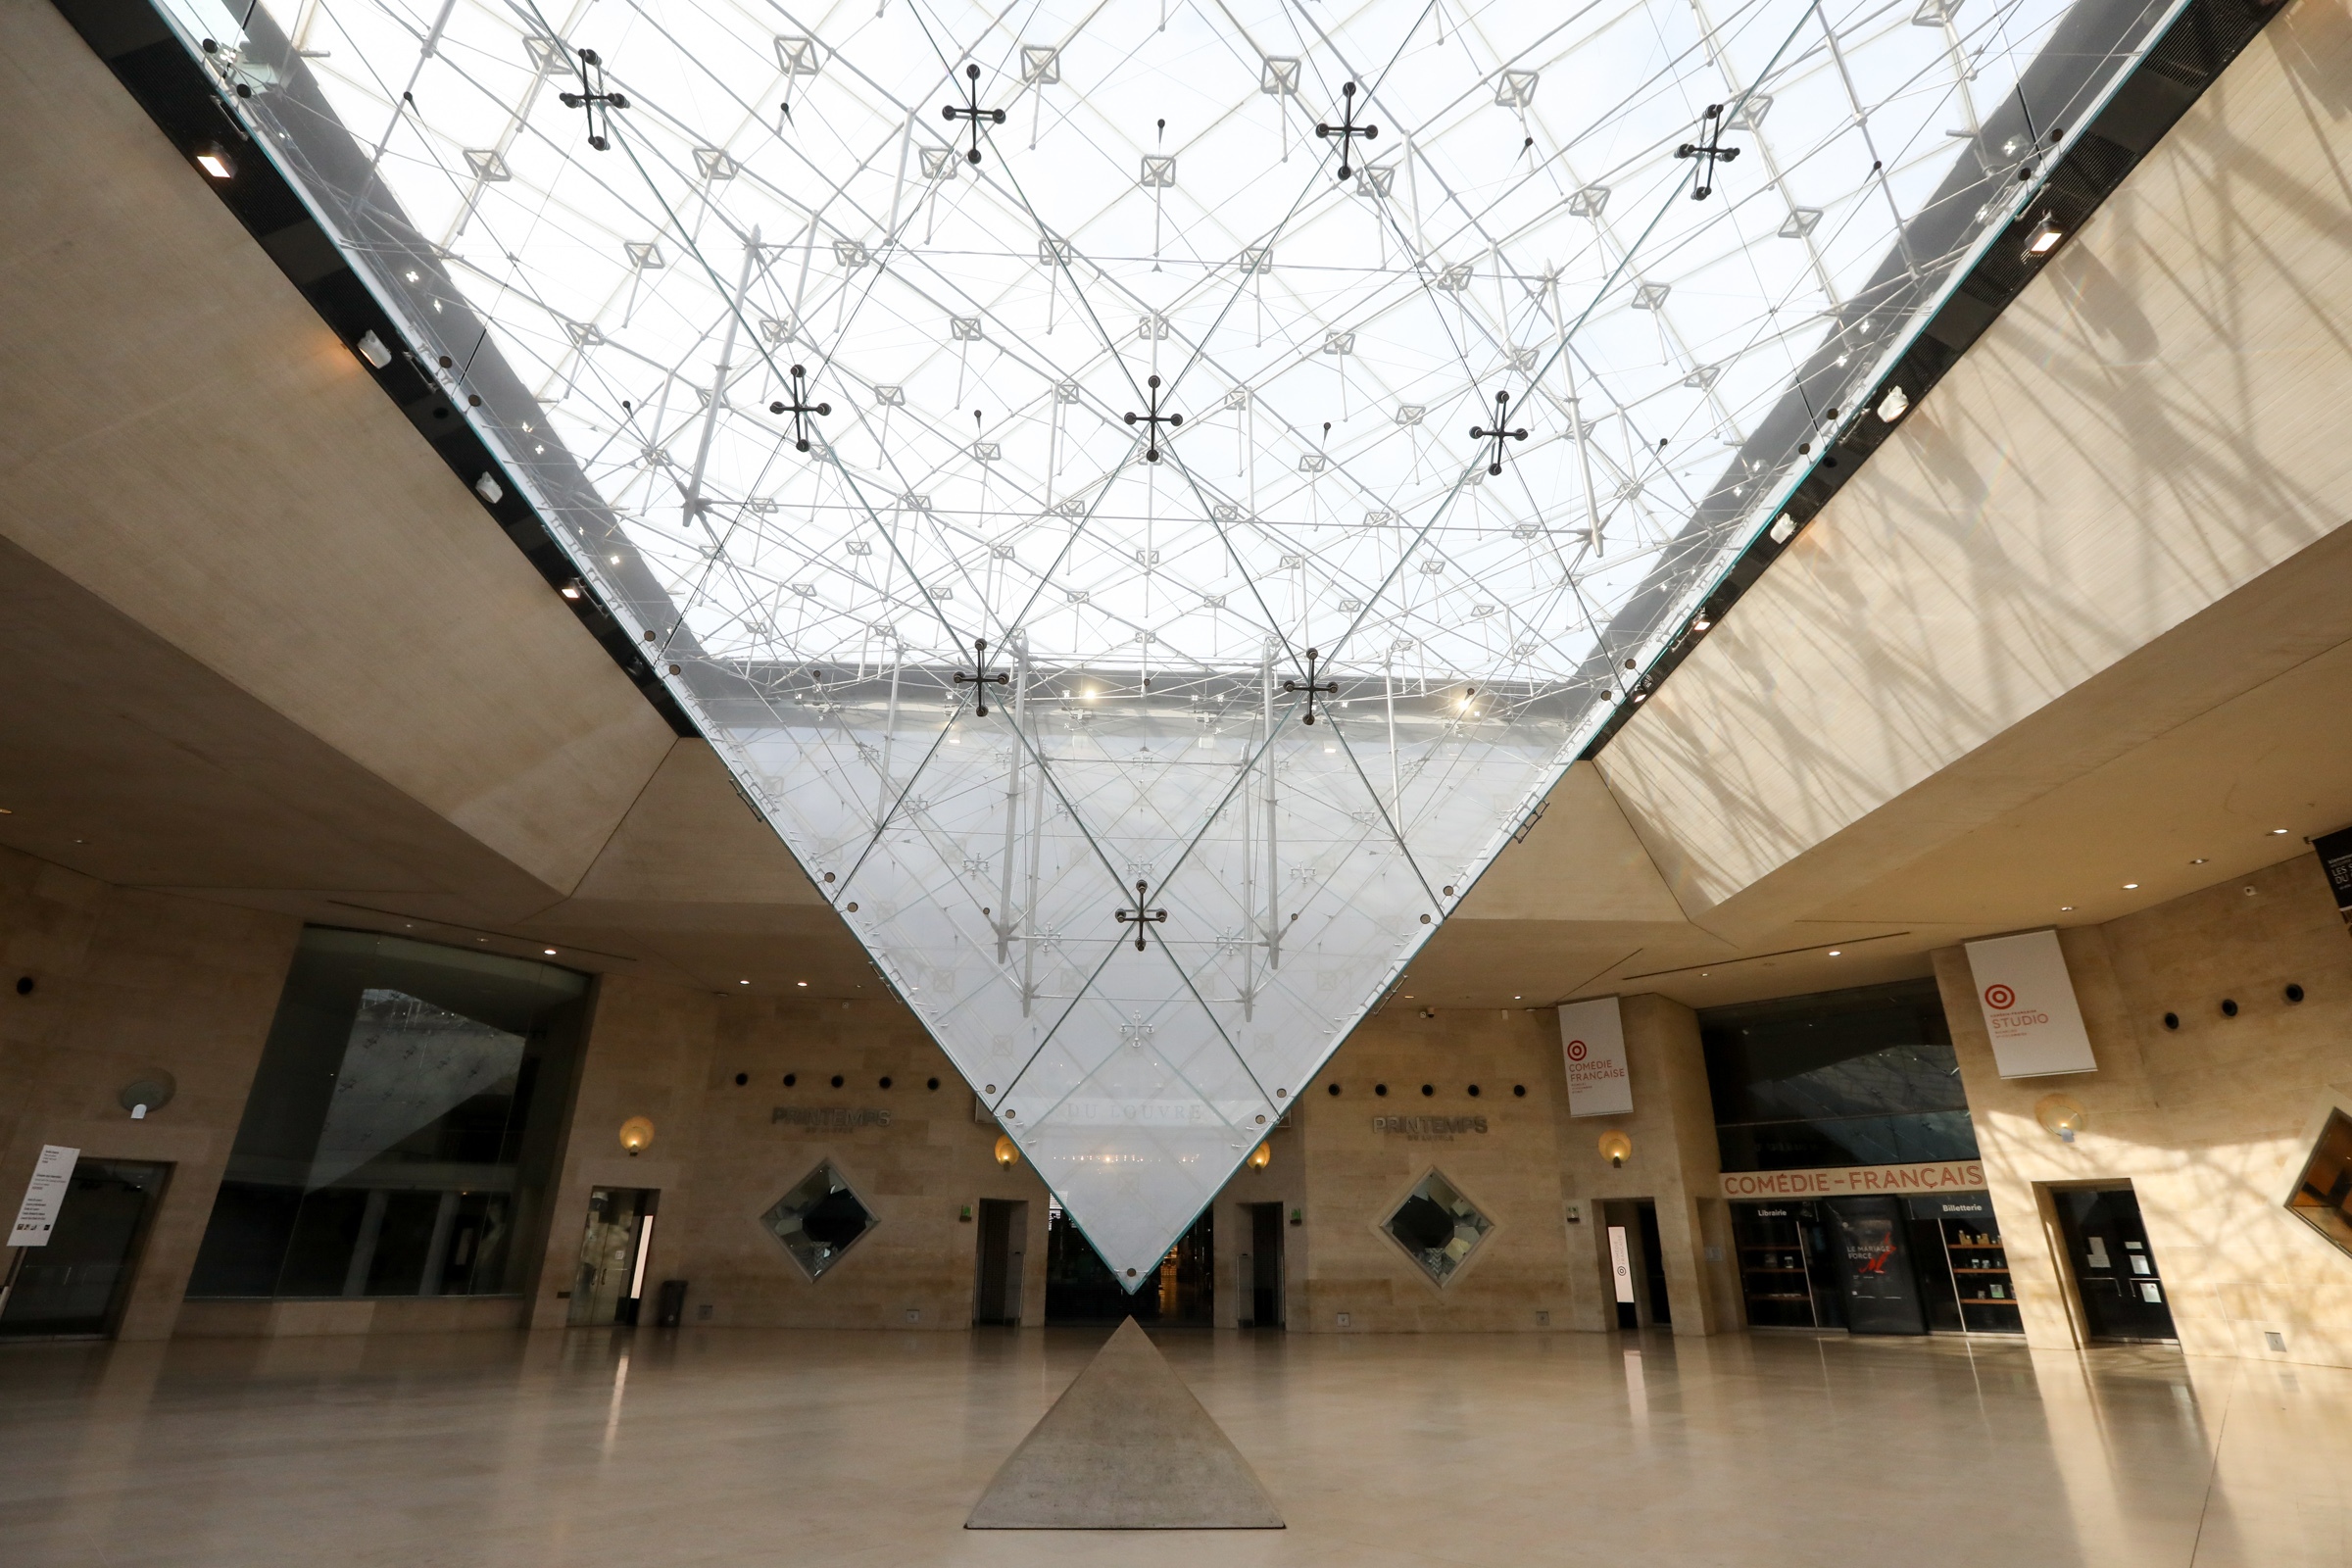 Museu do Louvre ingresso